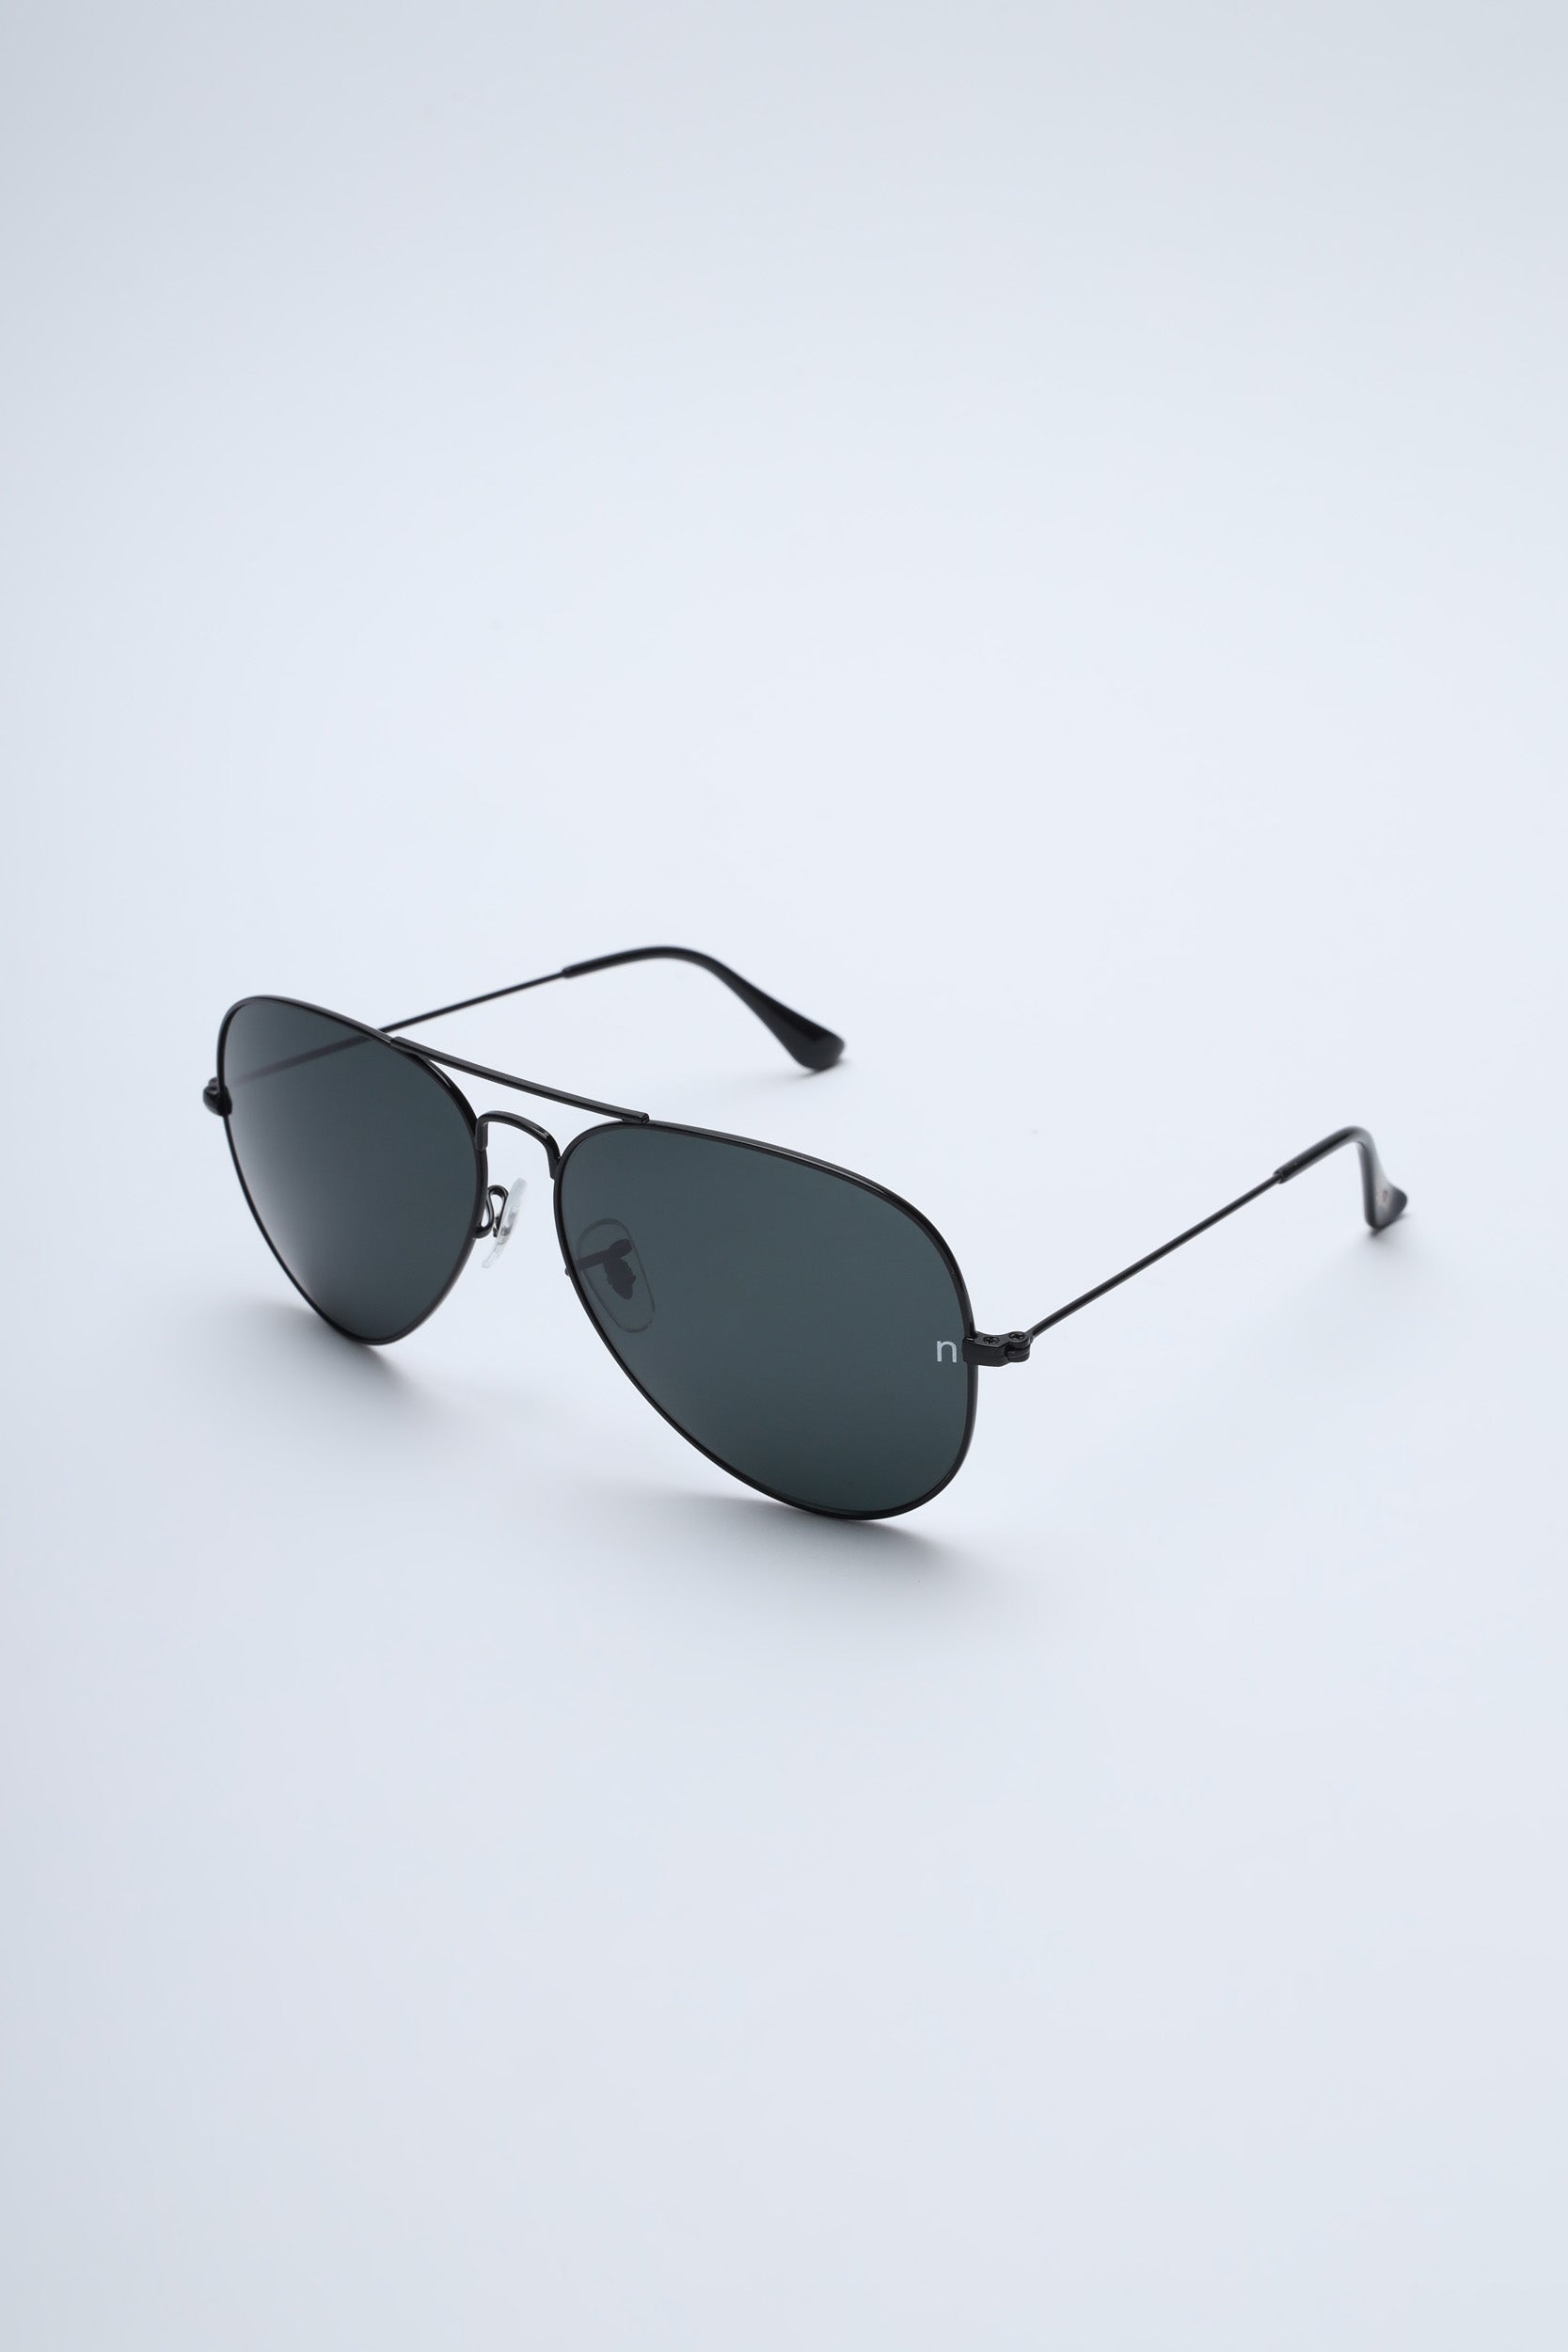 Fastrack Sunglasses Flat 20% Off On Sunglasses Ad - Advert Gallery